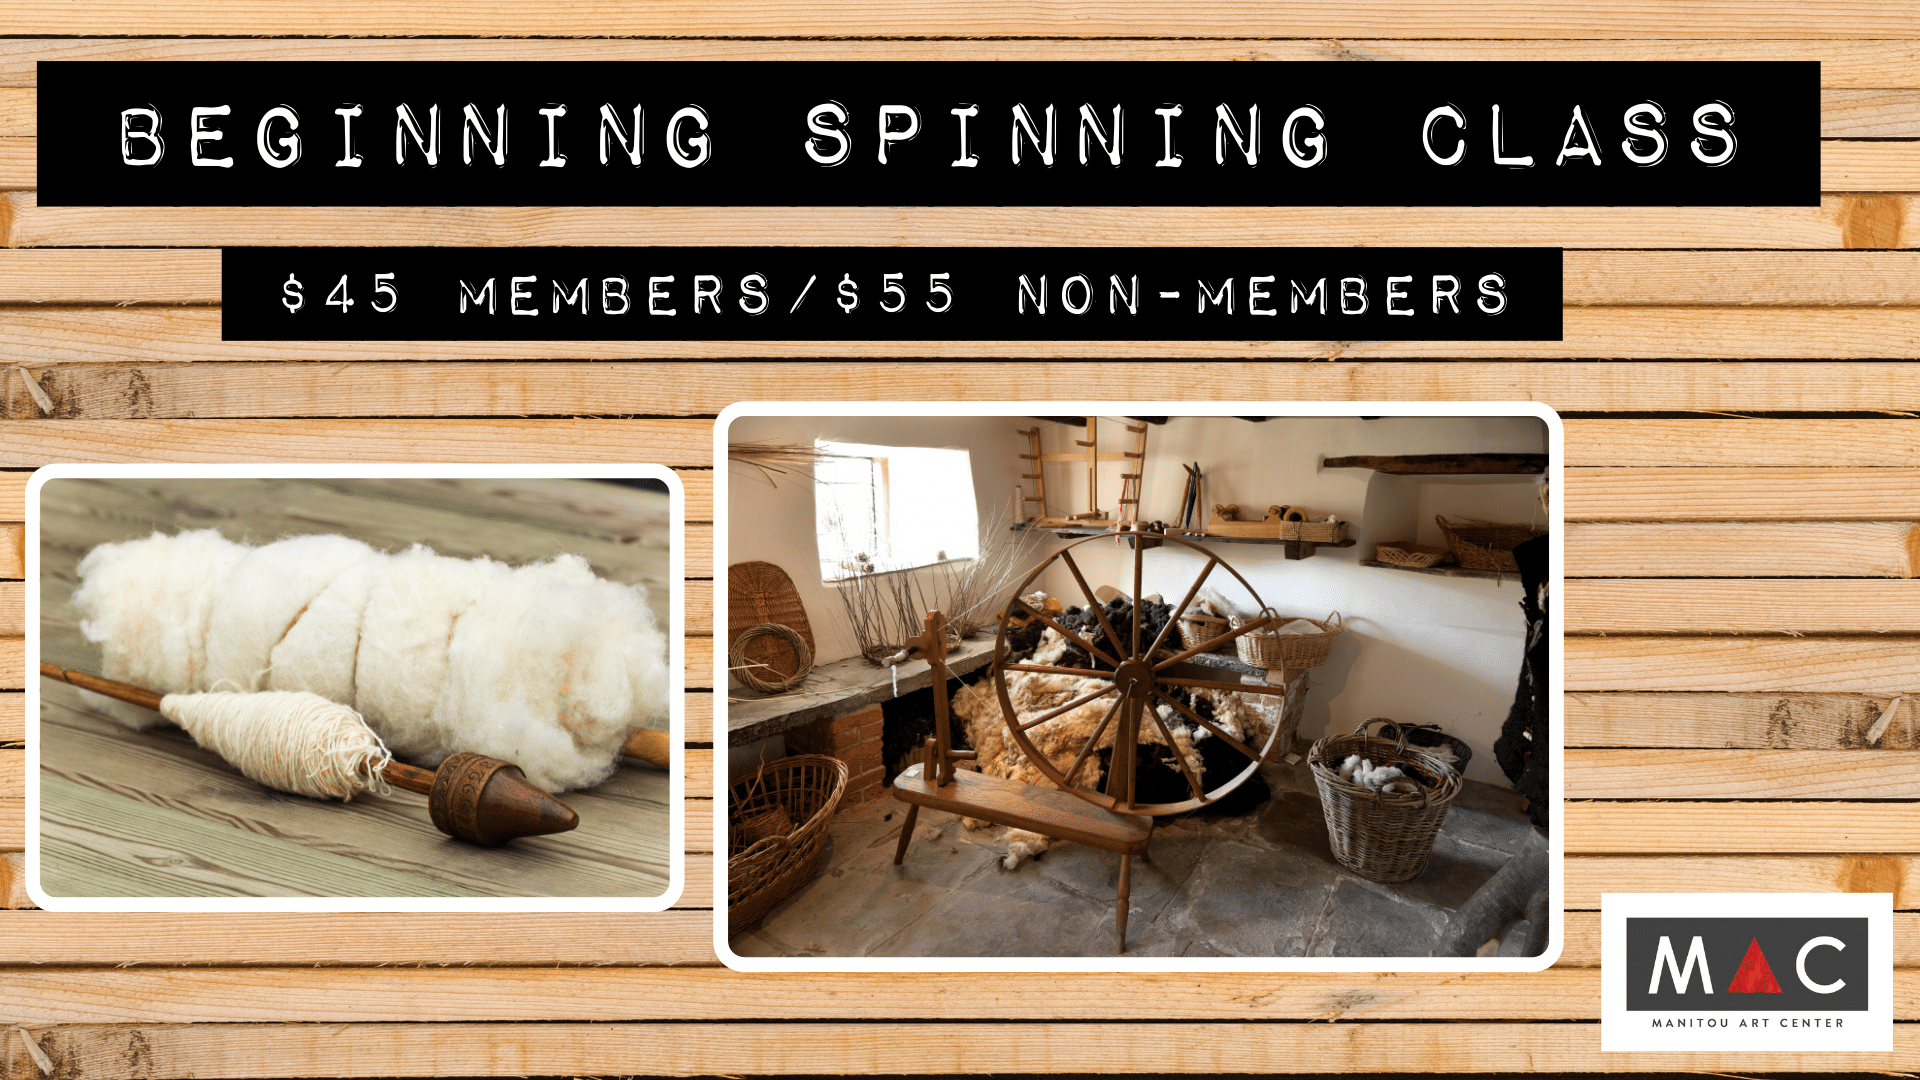 Image spinning wheel and yarn